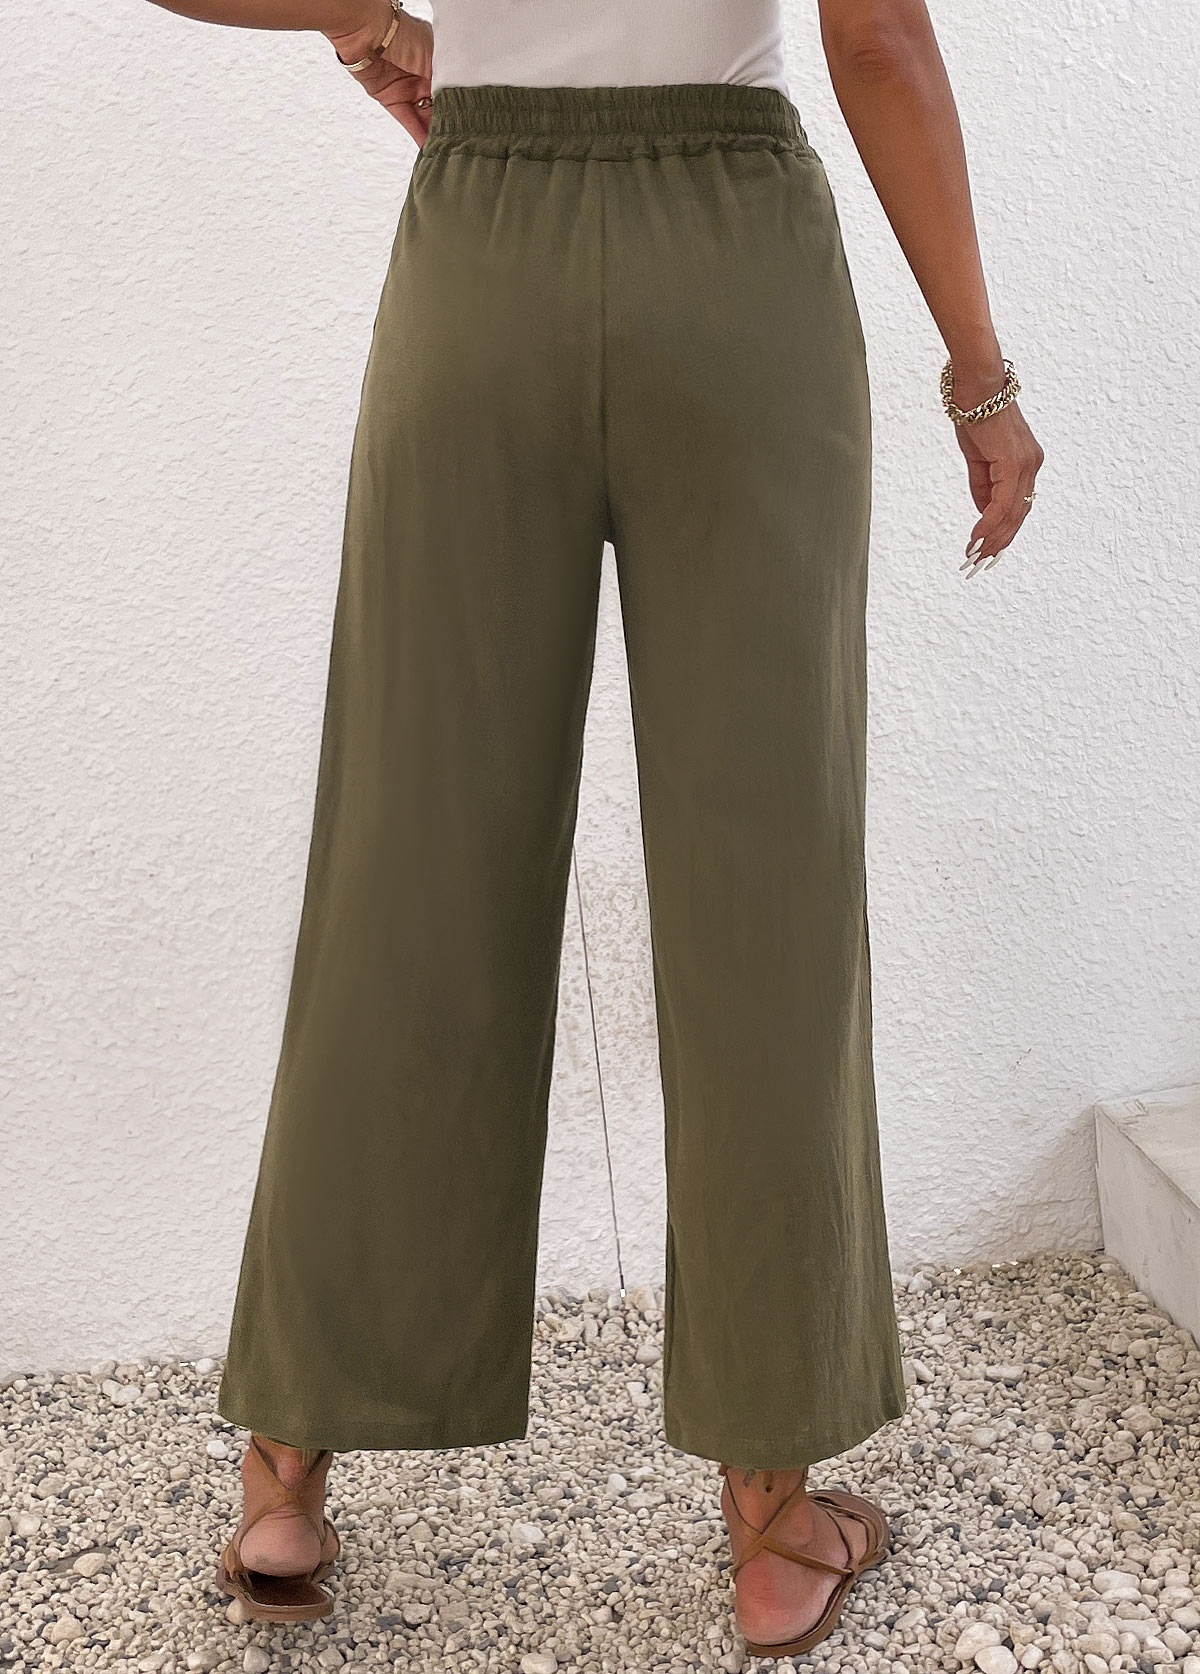 Pocket Elastic Waist High Waisted Olive Green Pants